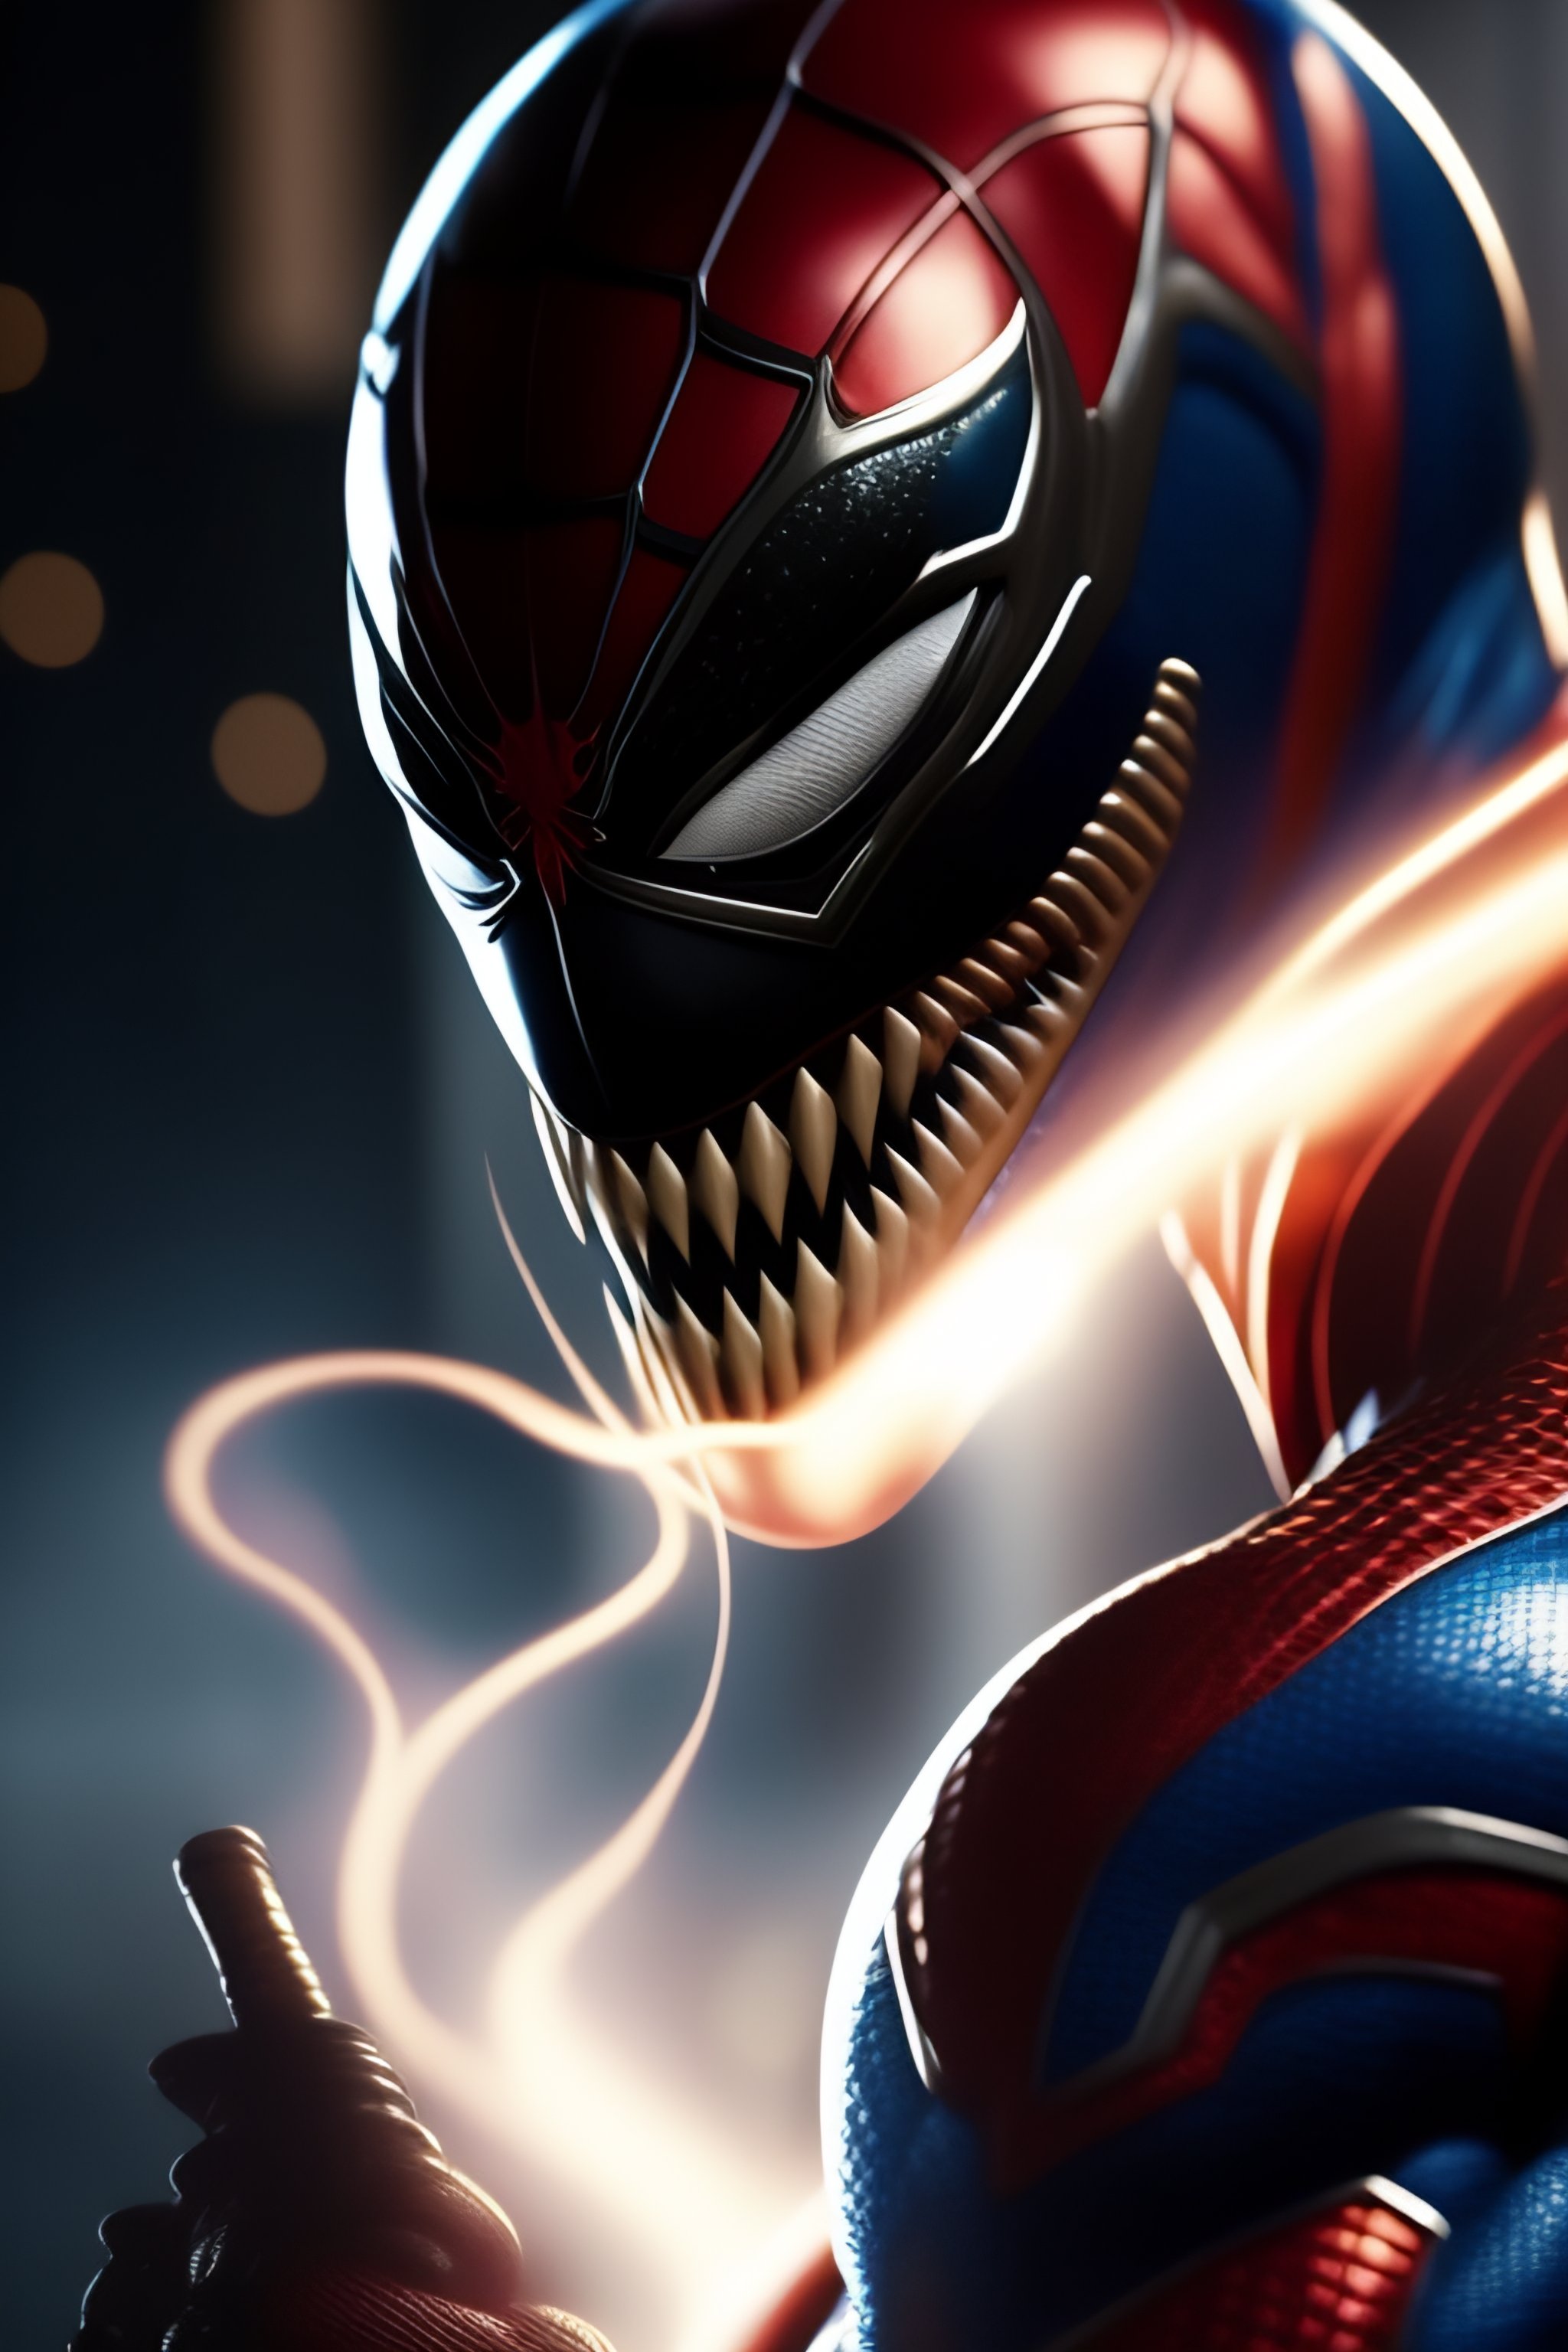 Lexica - Venom luchando contra Spiderman